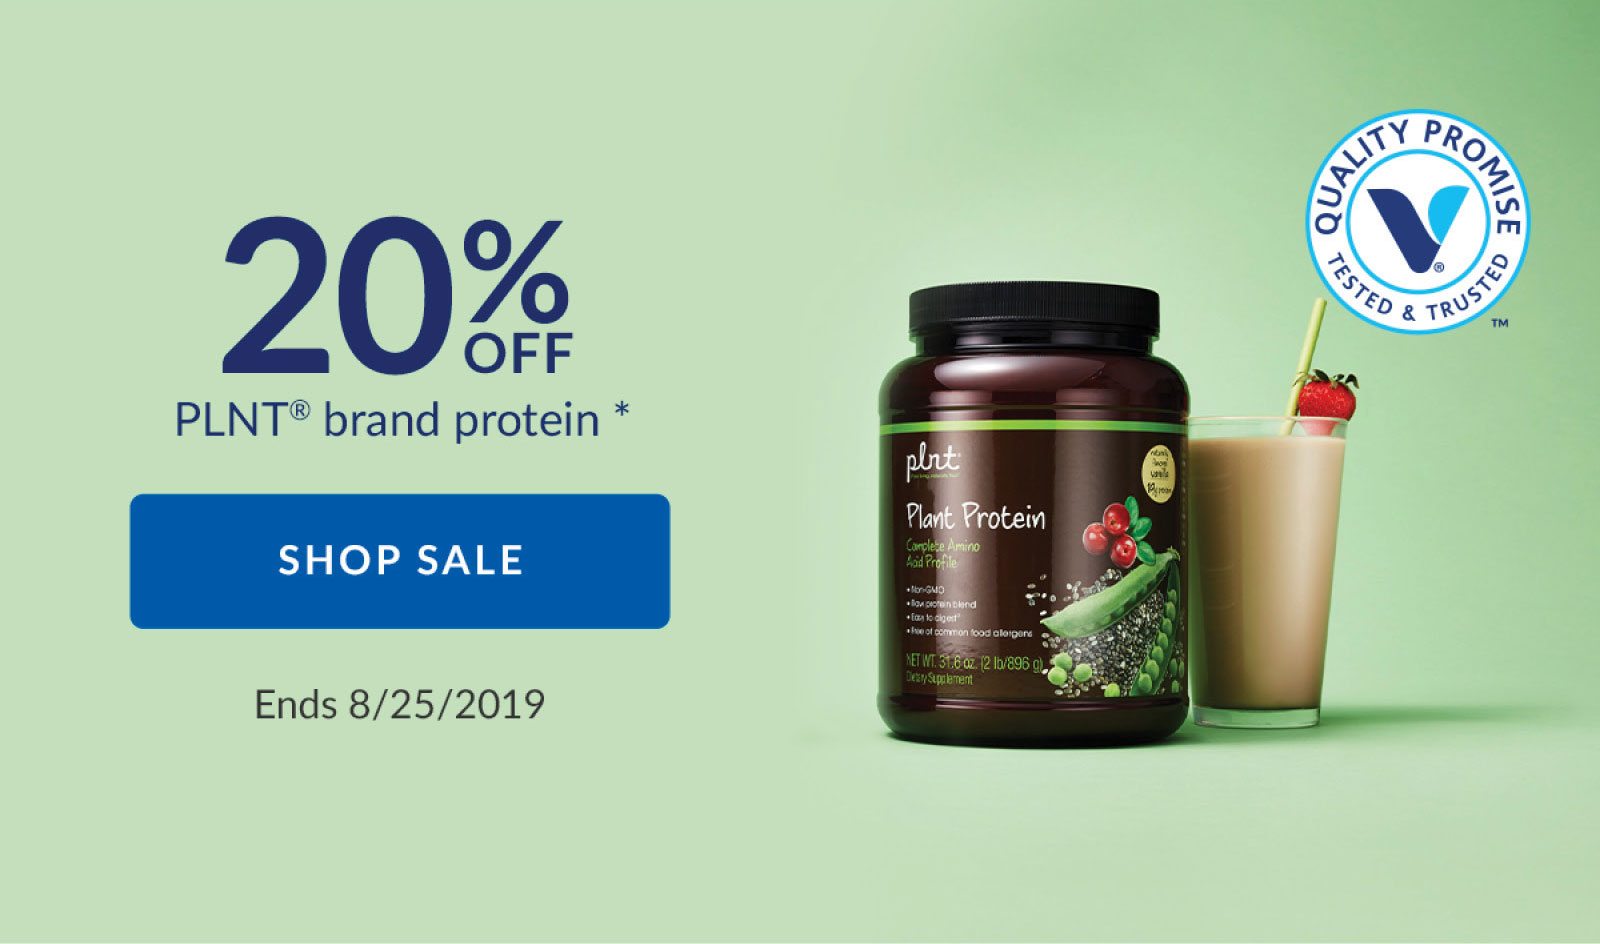 20% OFF PLNT brand protein * | SHOP SALE | Ends 8/25/2019